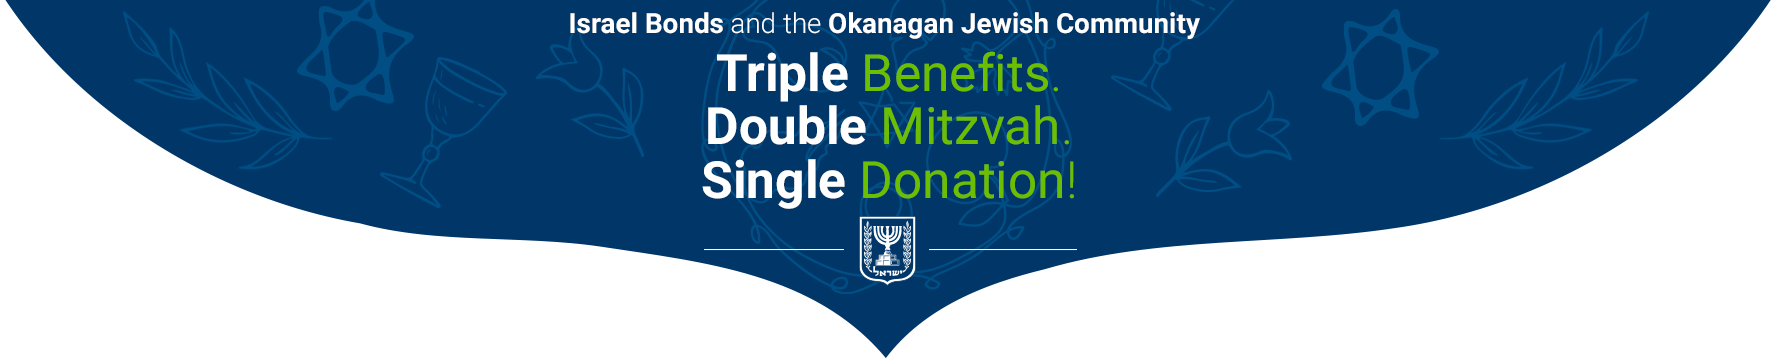 Triple Benefits. Double Mitzvah. Single Donation.